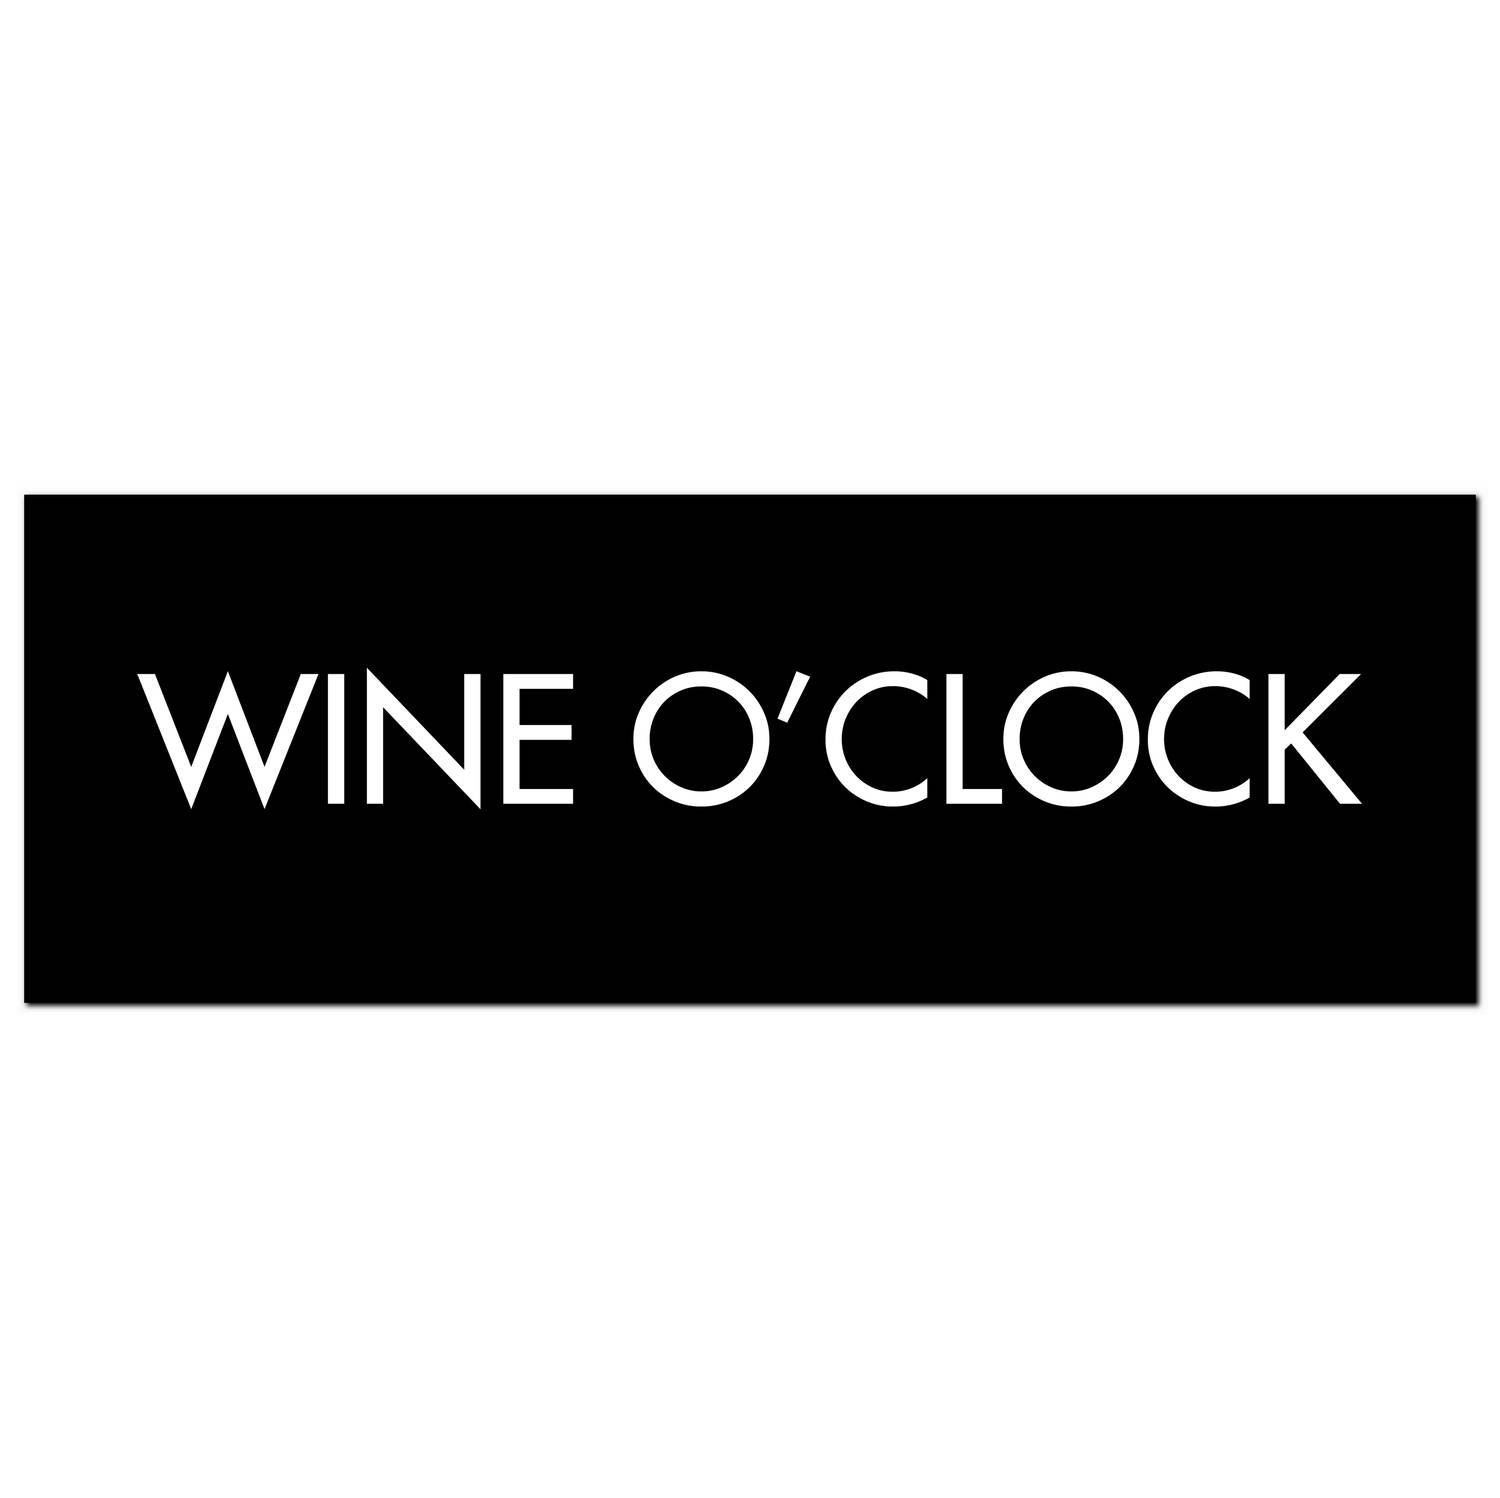 Wine O'Clock Silver Foil Plaque - Image 1